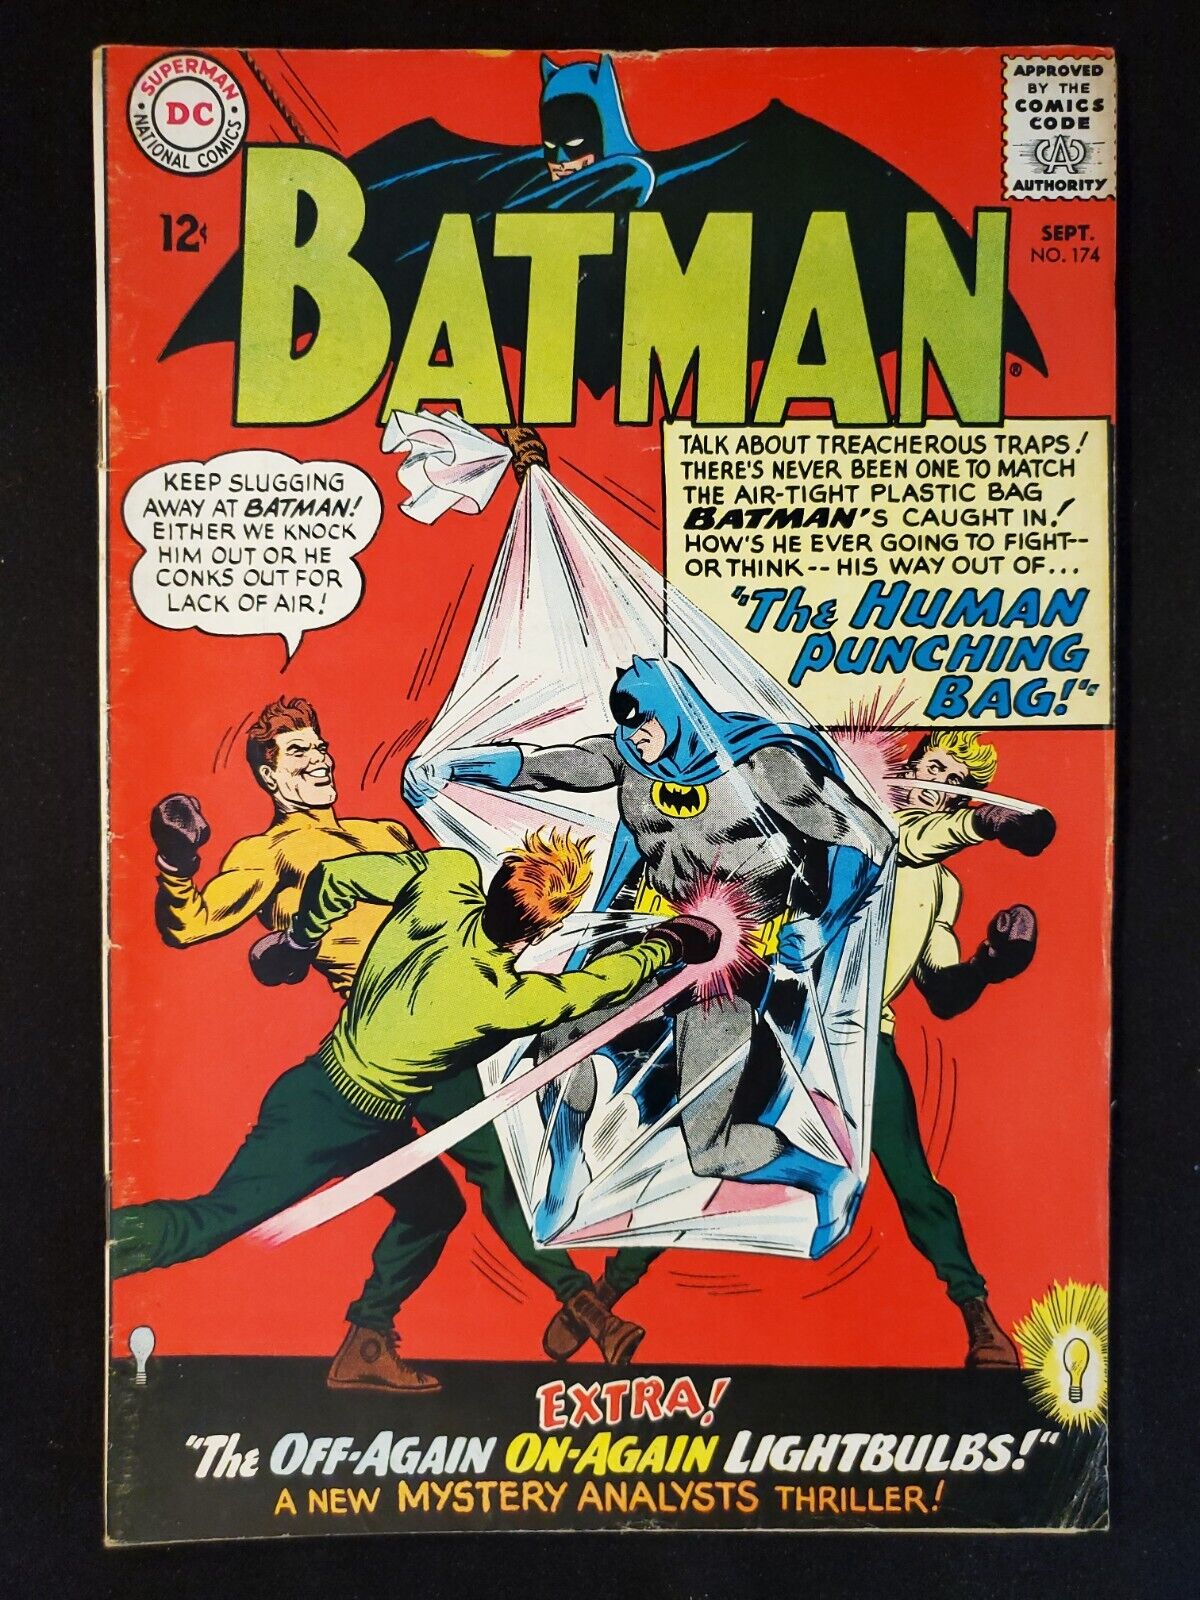 Batman Issue 174 Sept 1965 1st App of B.G. Hunter AKA The Big Game Hunter